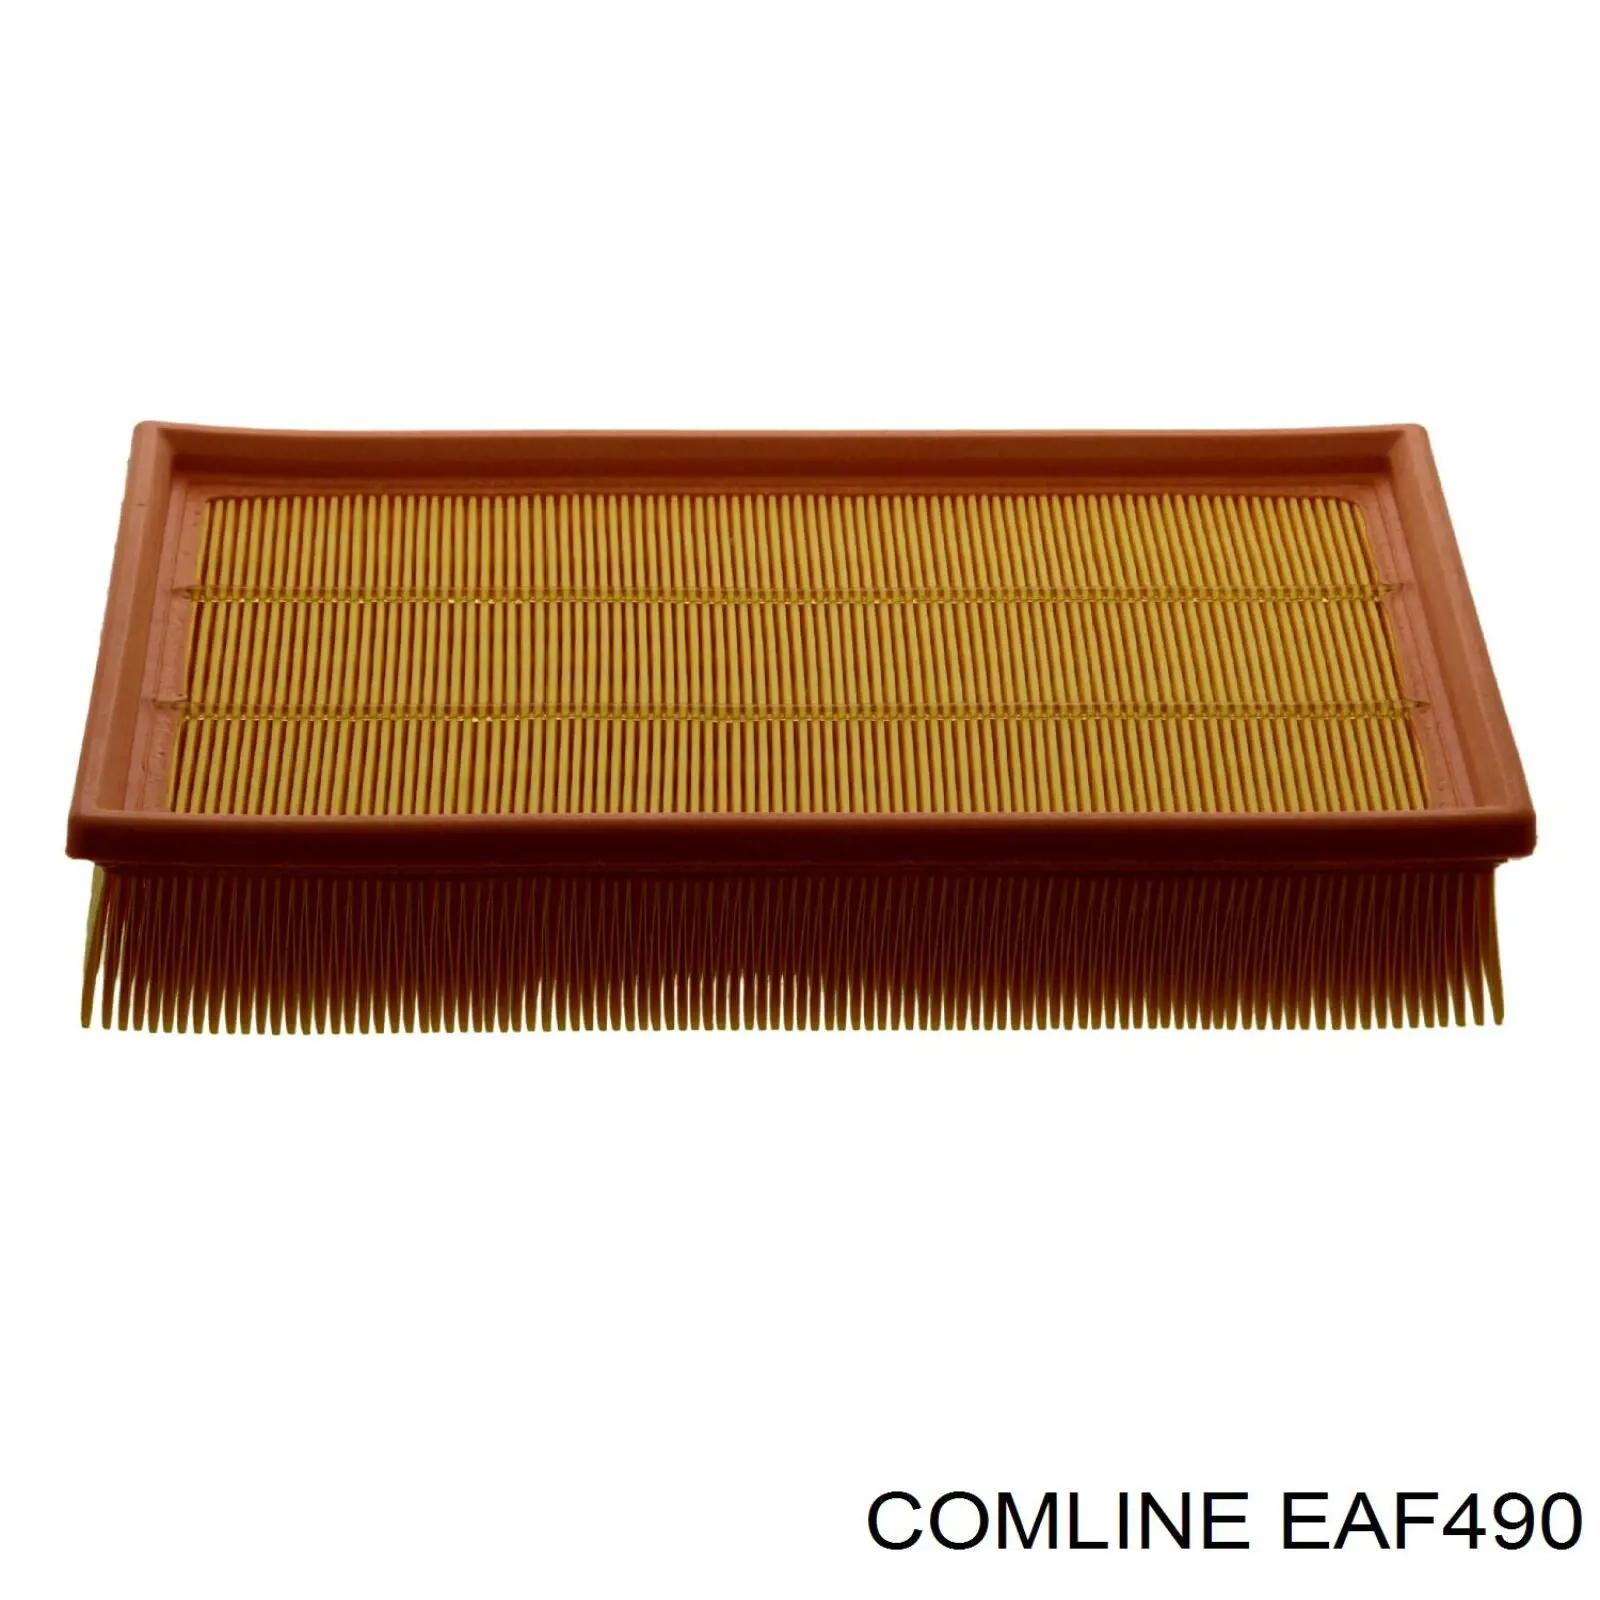 EAF490 Comline filtro de aire